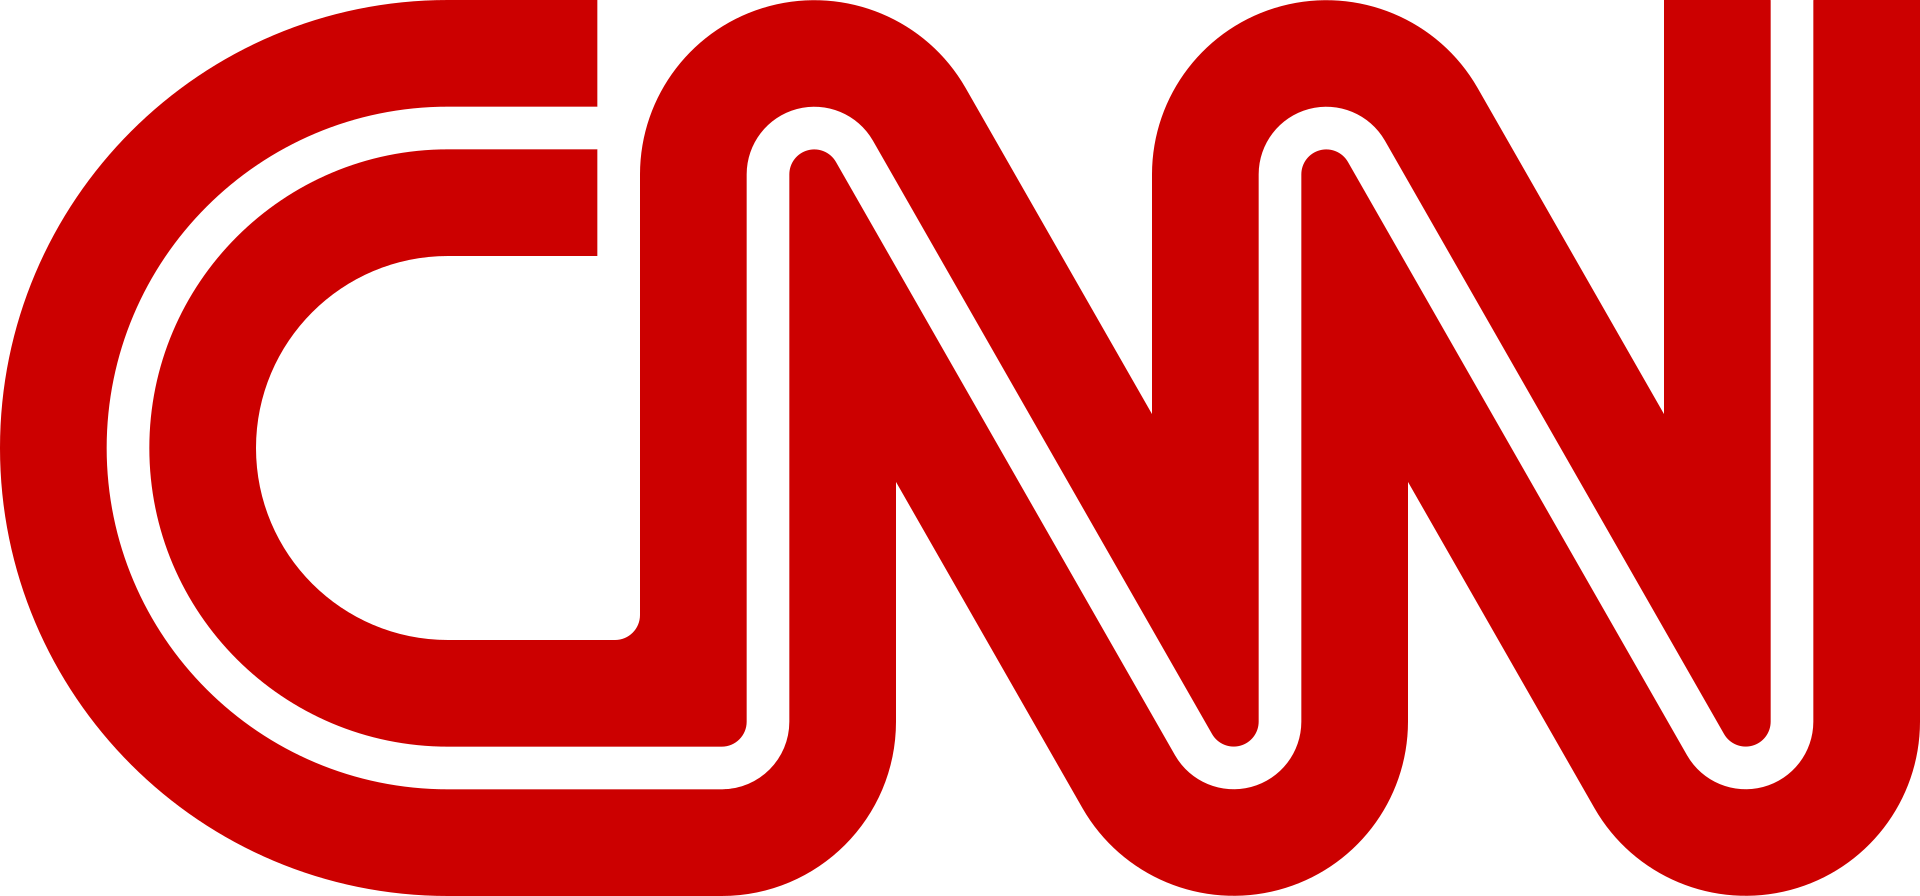 High Quality CNN Logo Blank Meme Template